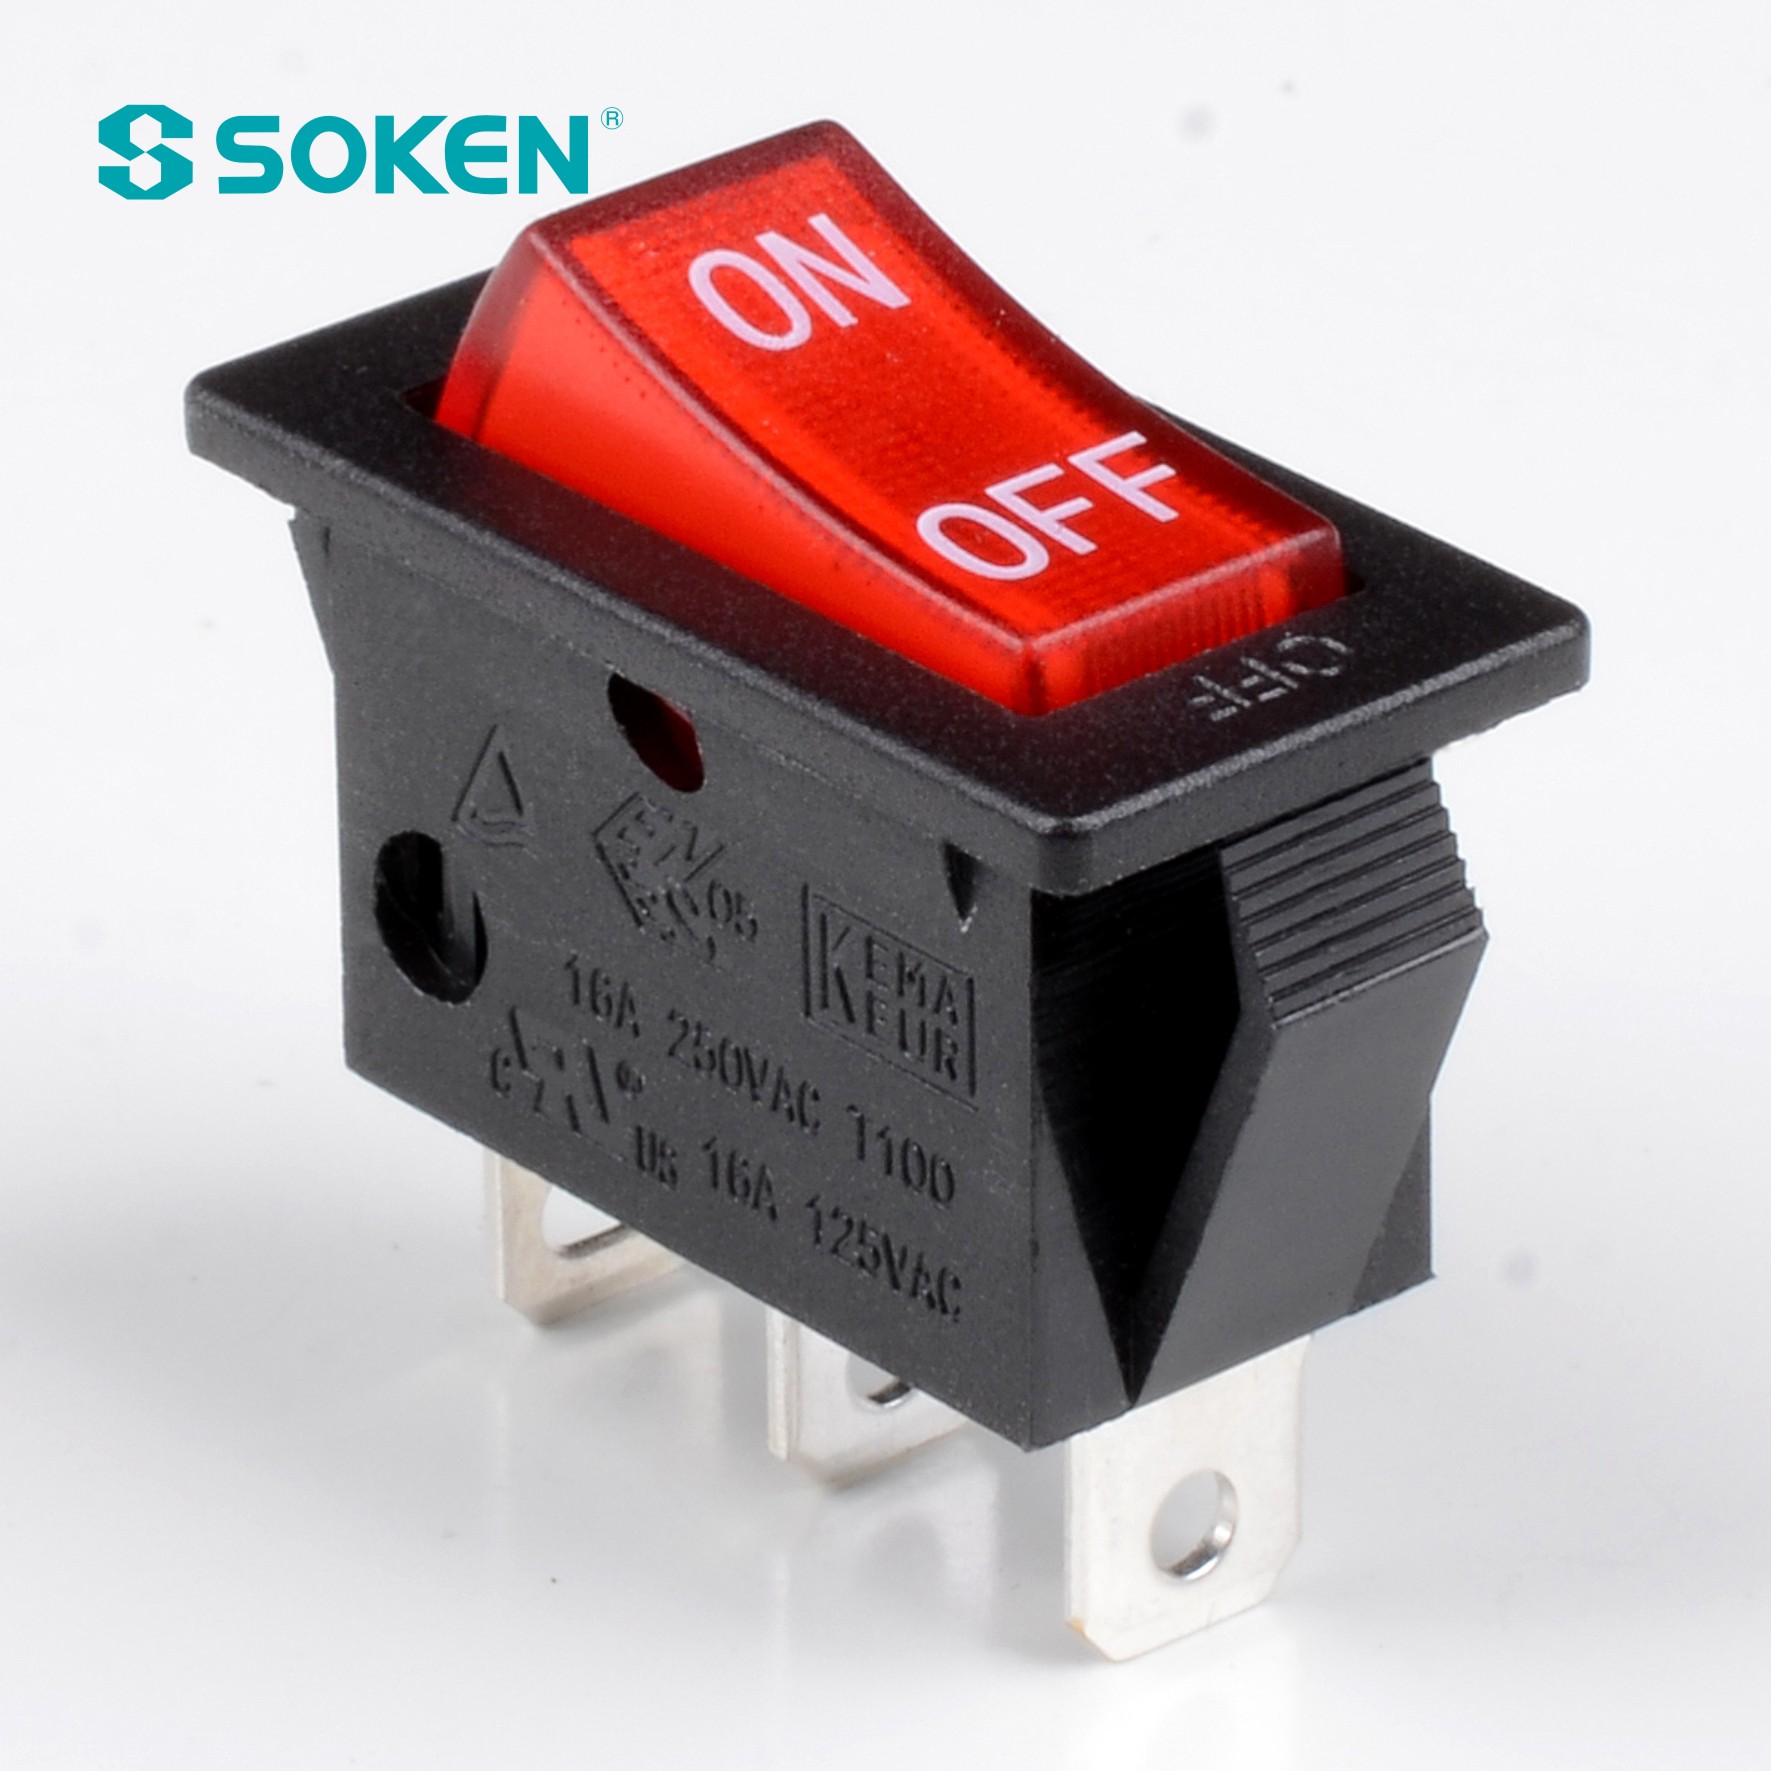 Soken Rk1-17 1X3 آن آف 3pins Rocker Switch تي